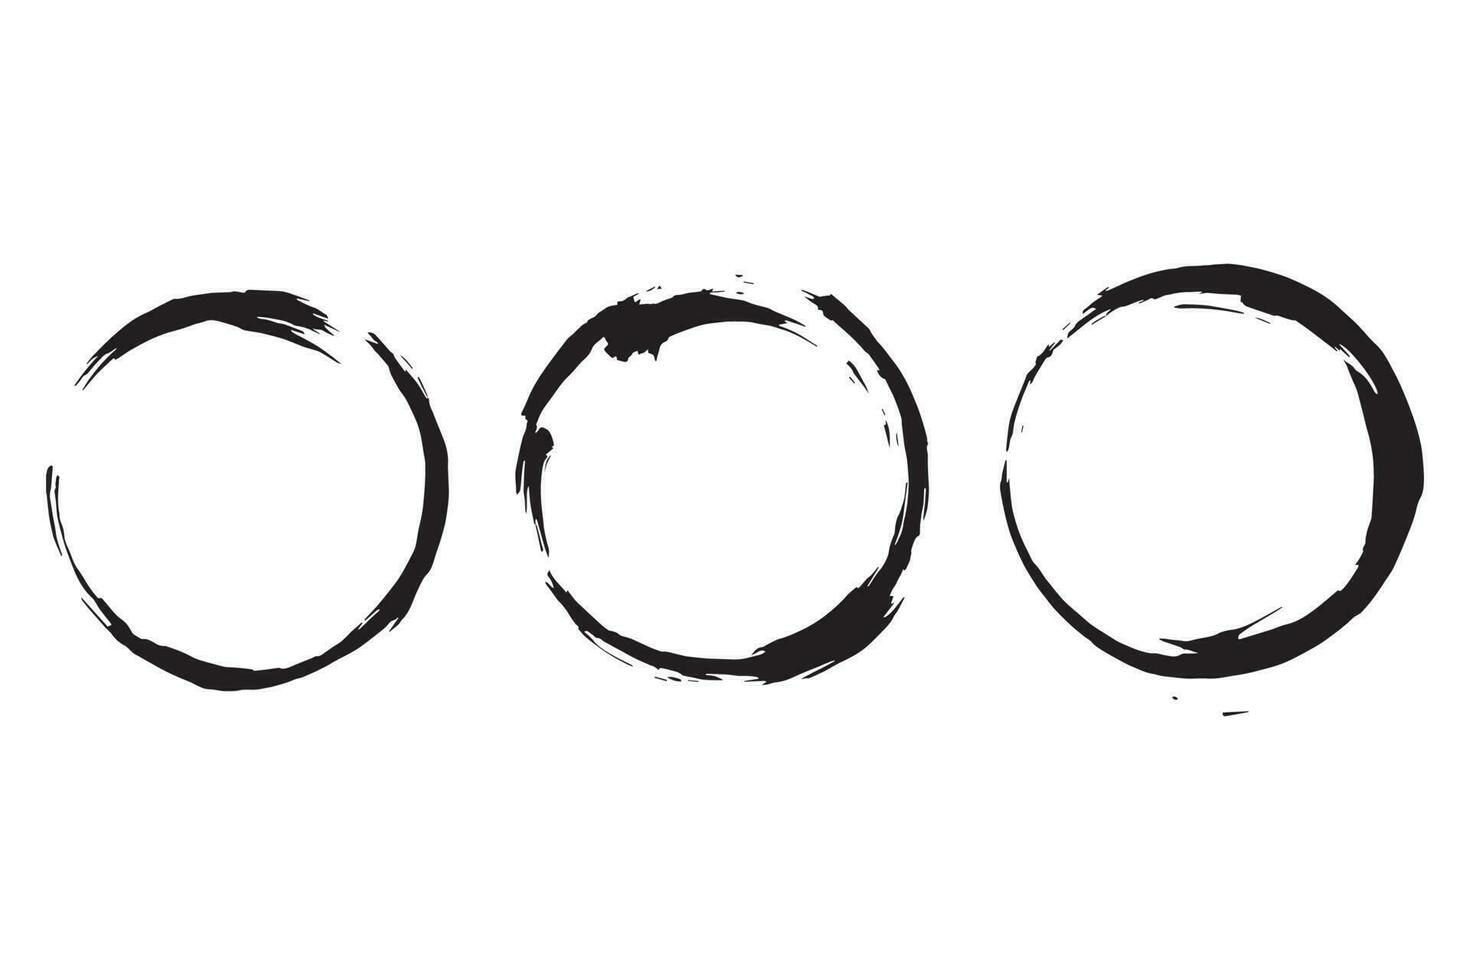 Colorful circle stroke set, round brush stroke, grunge circle strokes vector